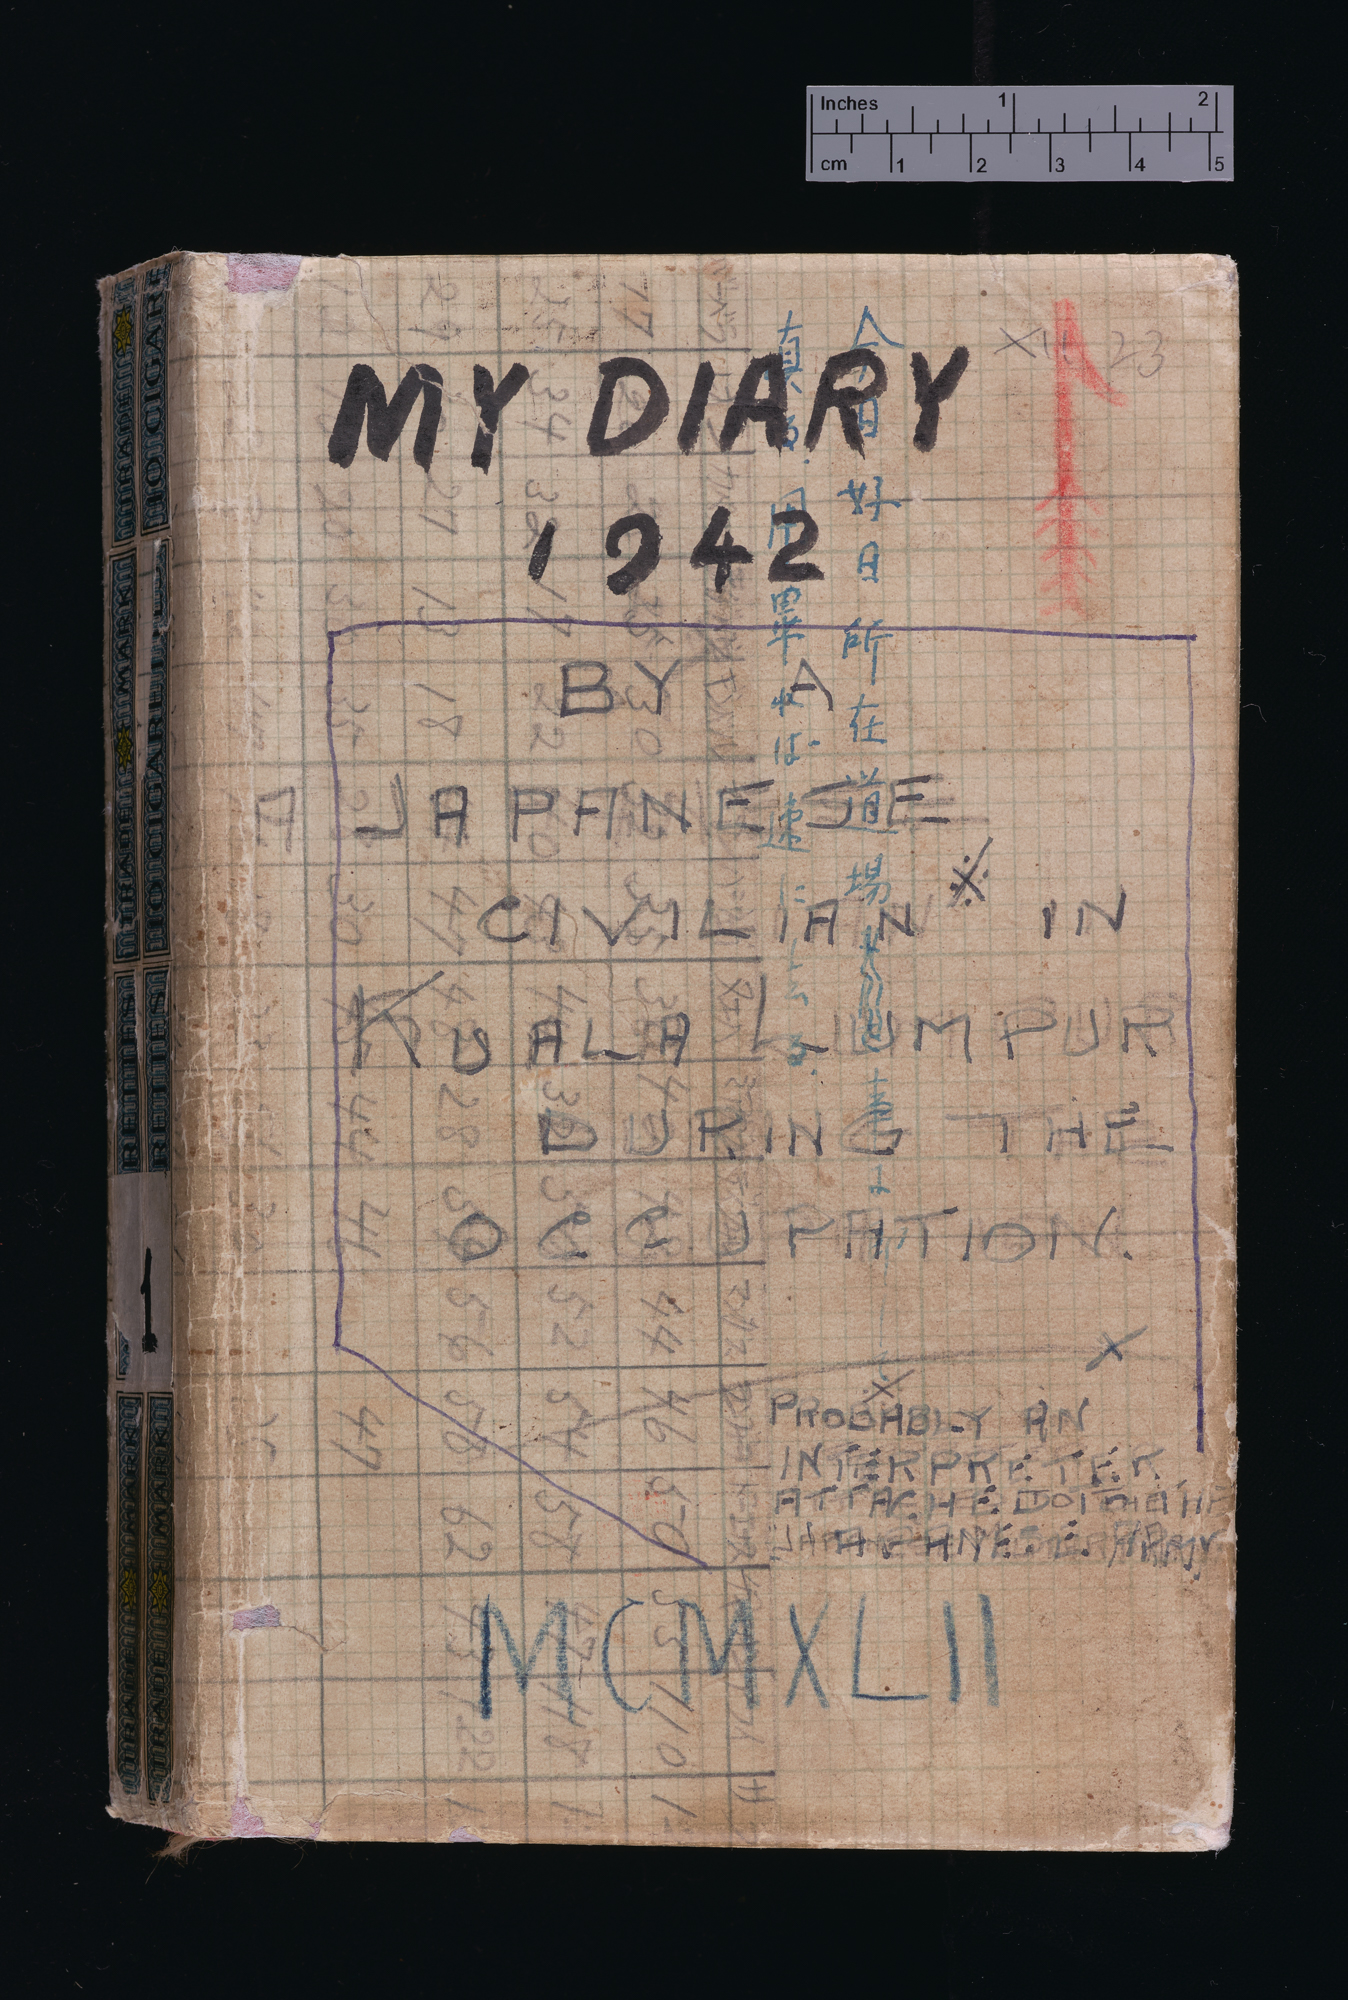 My diary 1942